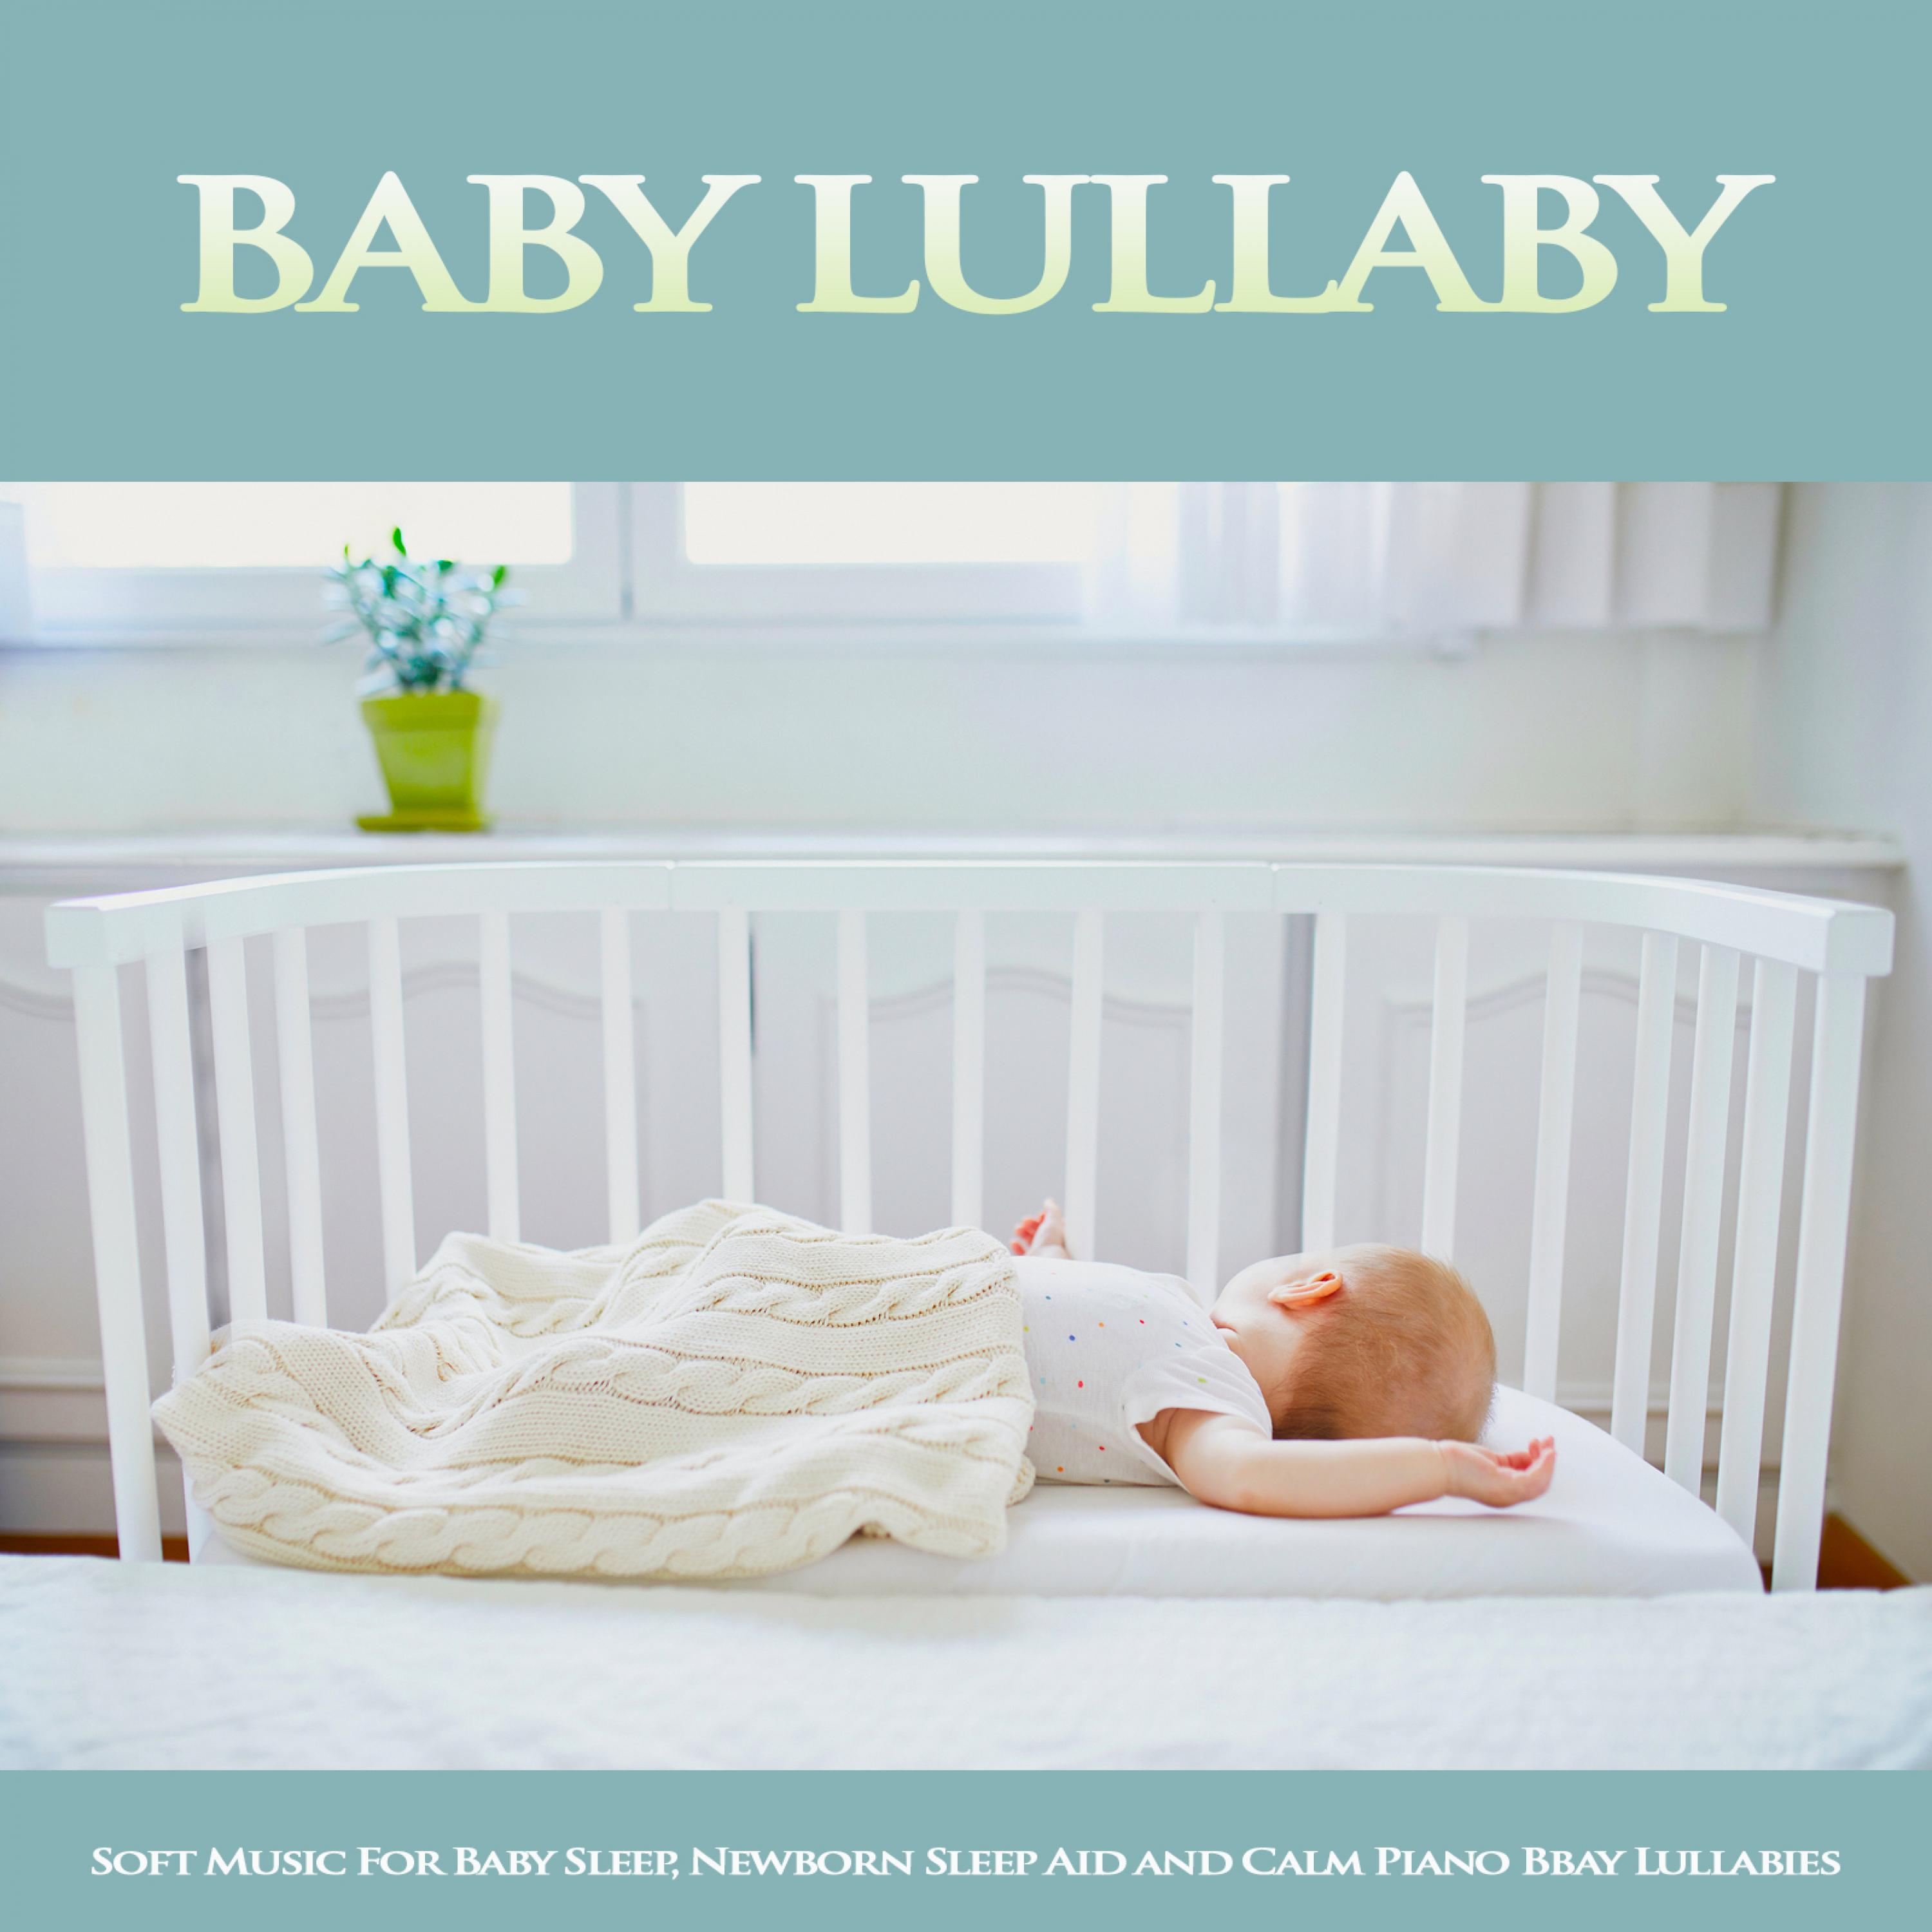 Baby Lullaby: Soft Music For Baby Sleep, Newborn Sleep Aid and Calm Piano Baby Lullabies